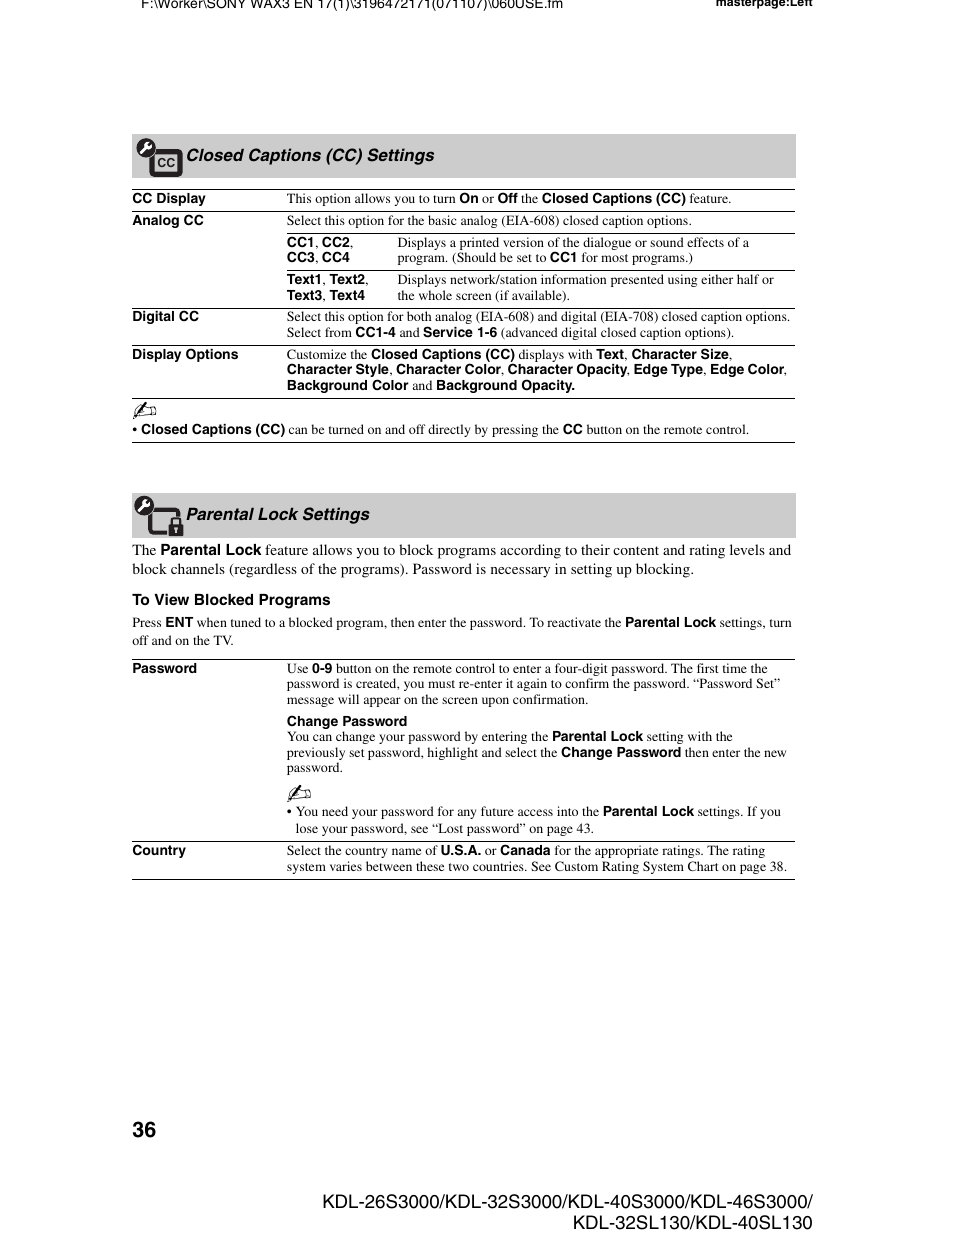 Closed captions (cc) settings, Parental lock settings | Sony KDL-40SL130 User Manual | Page 36 / 48